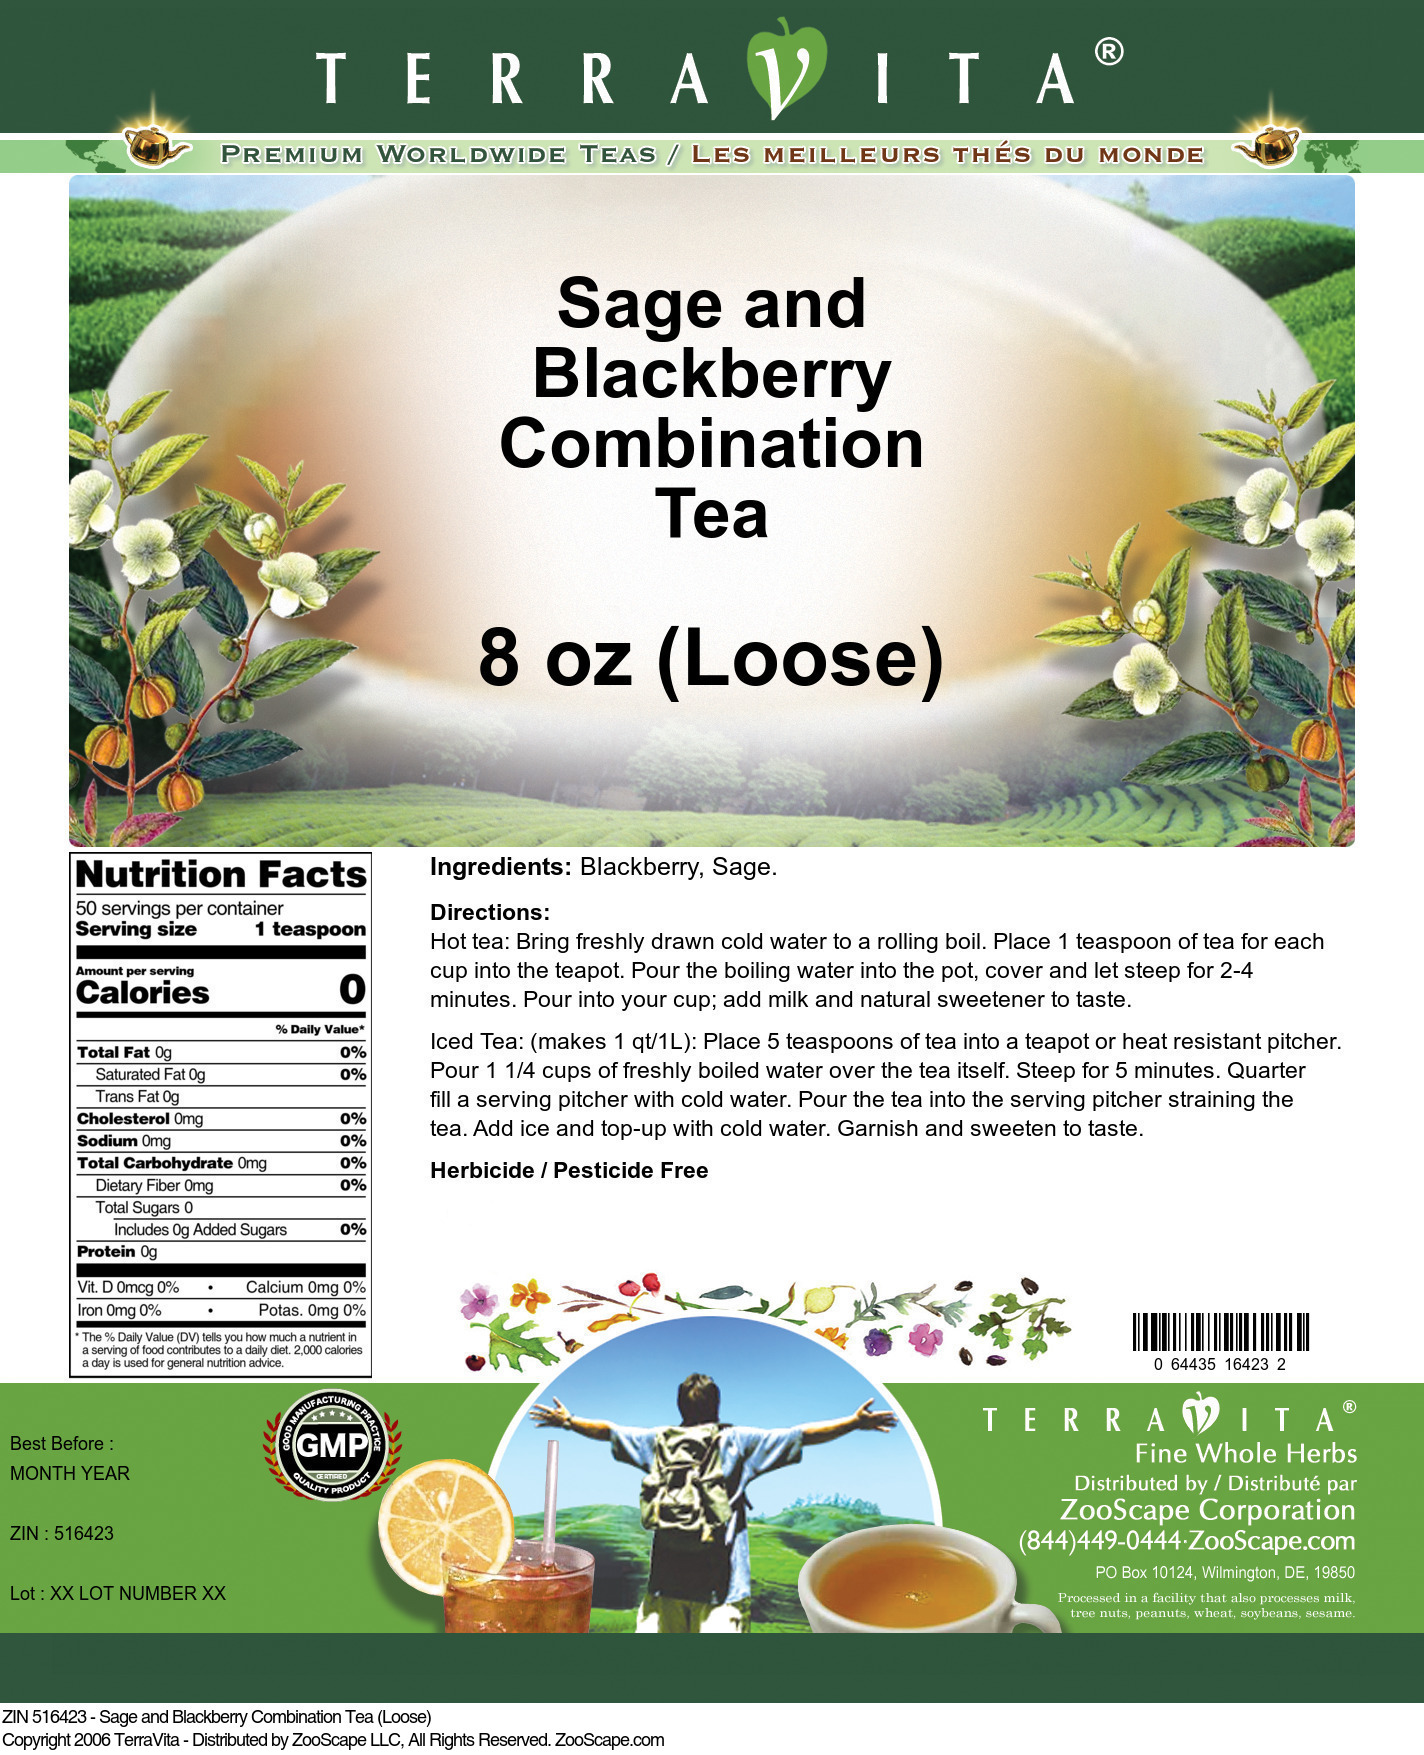 Sage and Blackberry Combination Tea (Loose) - Label